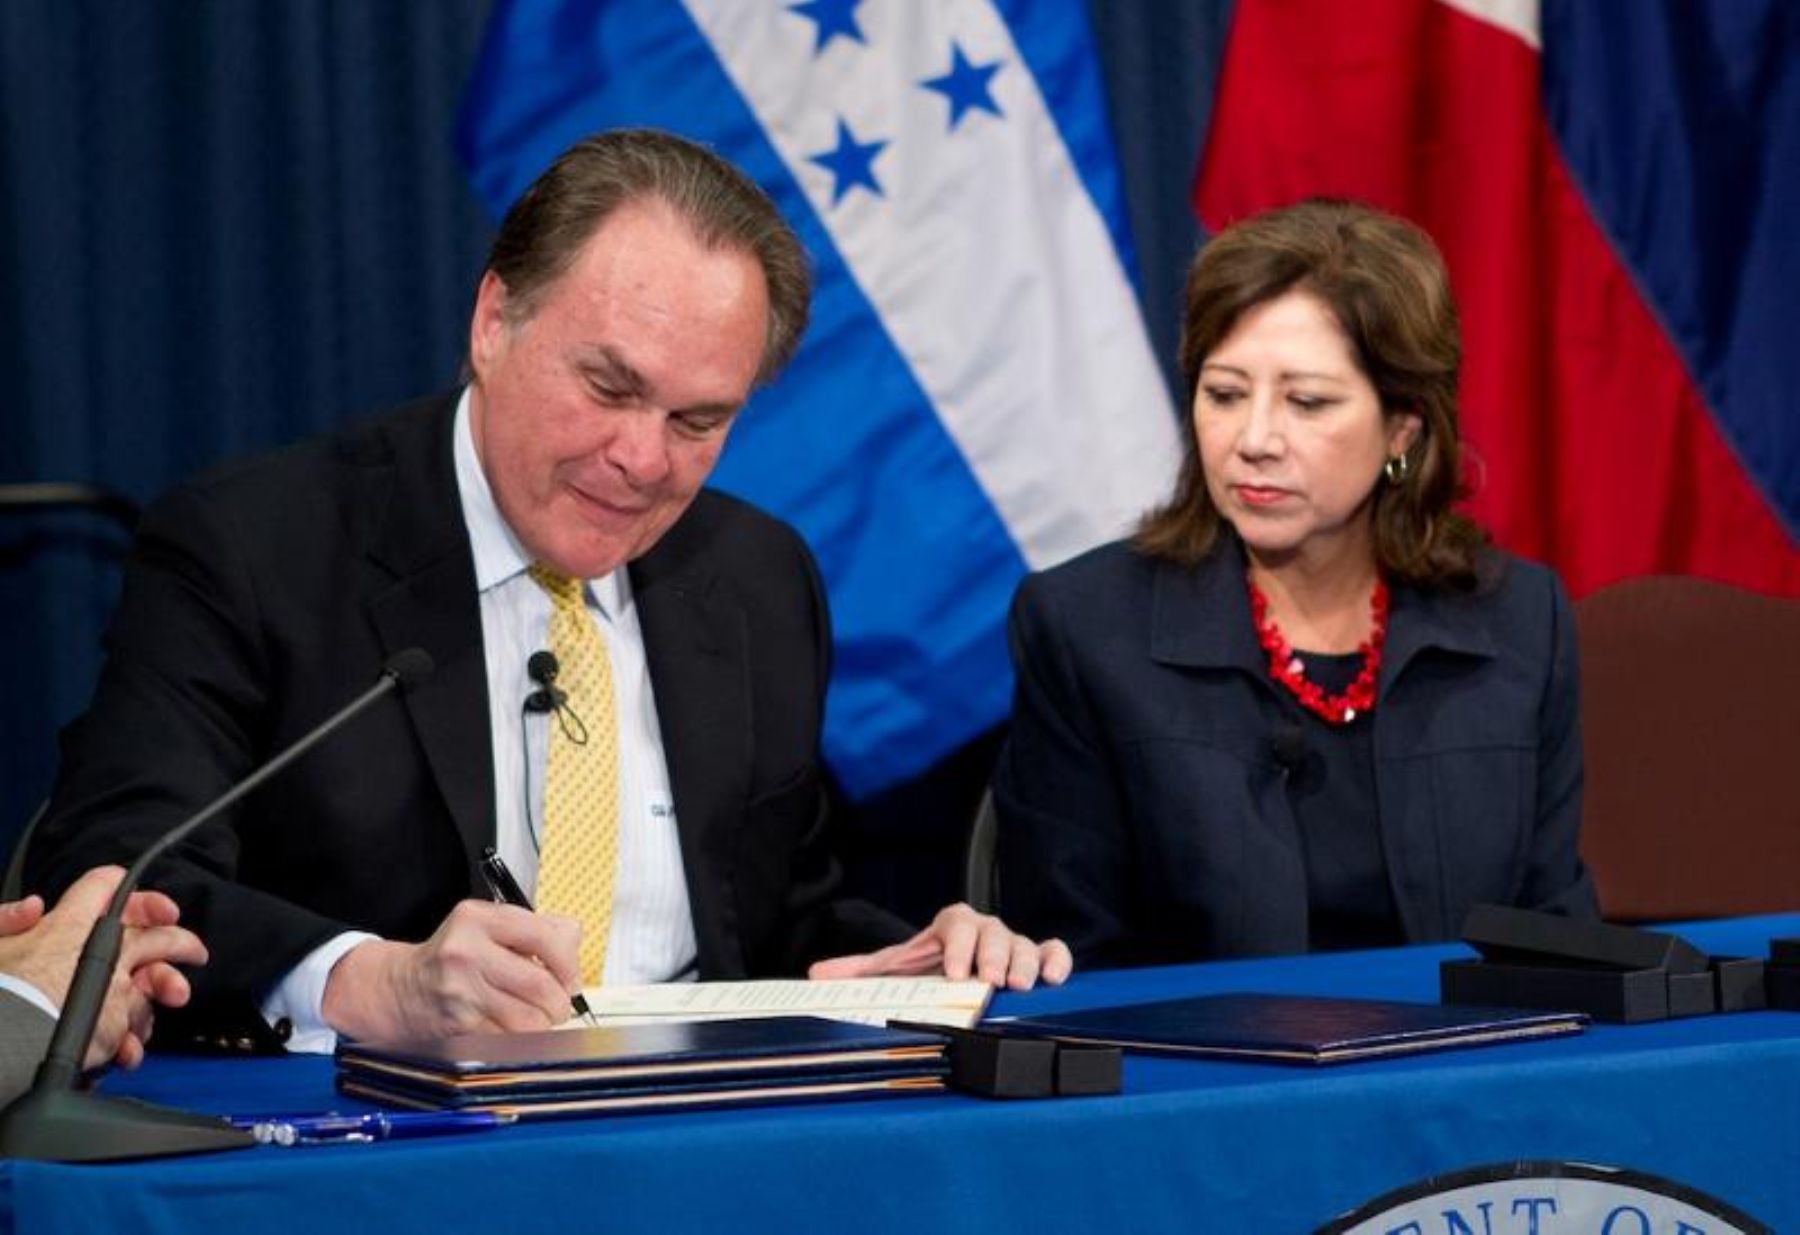 Peruvian Ambassador Harold Forsyth and Secretary of Labor Hilda L. Solis sign the agreement in Washington.